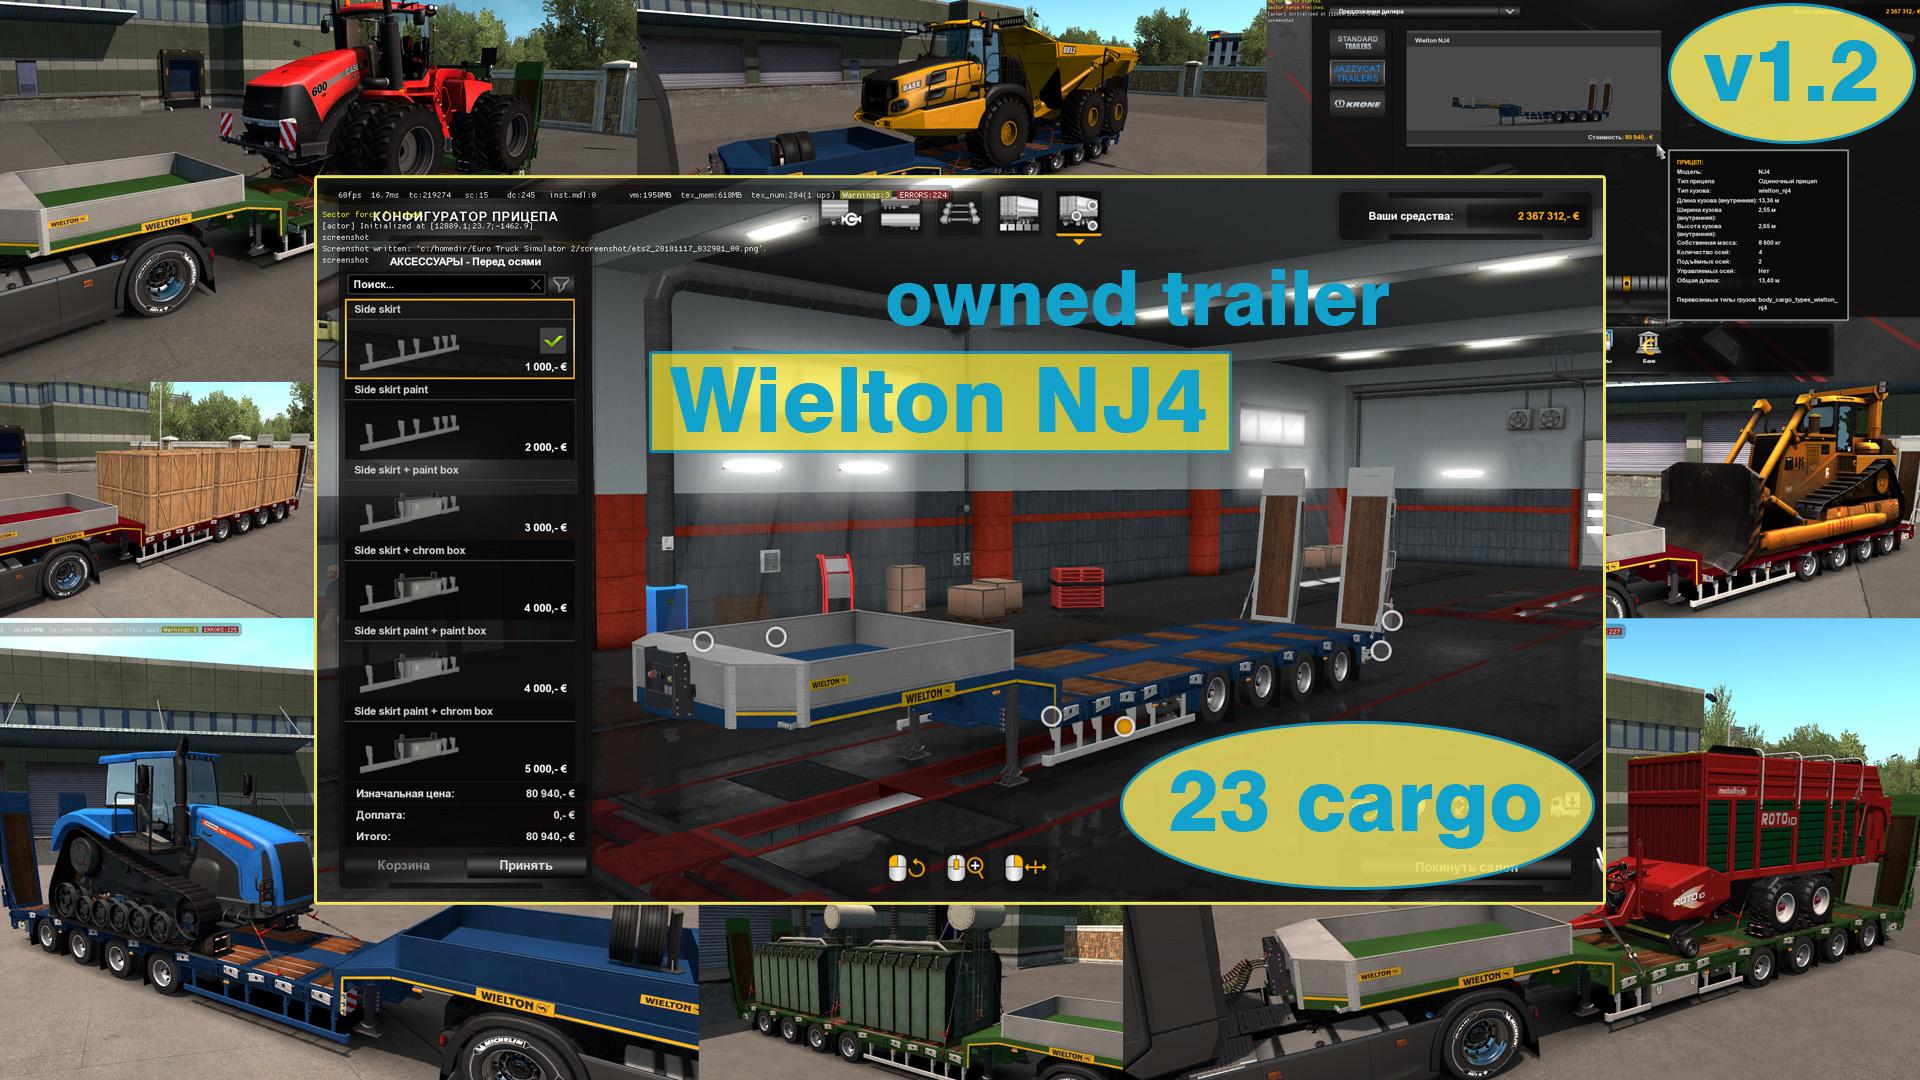 Ownable overweight trailer Wielton NJ4 v1.2